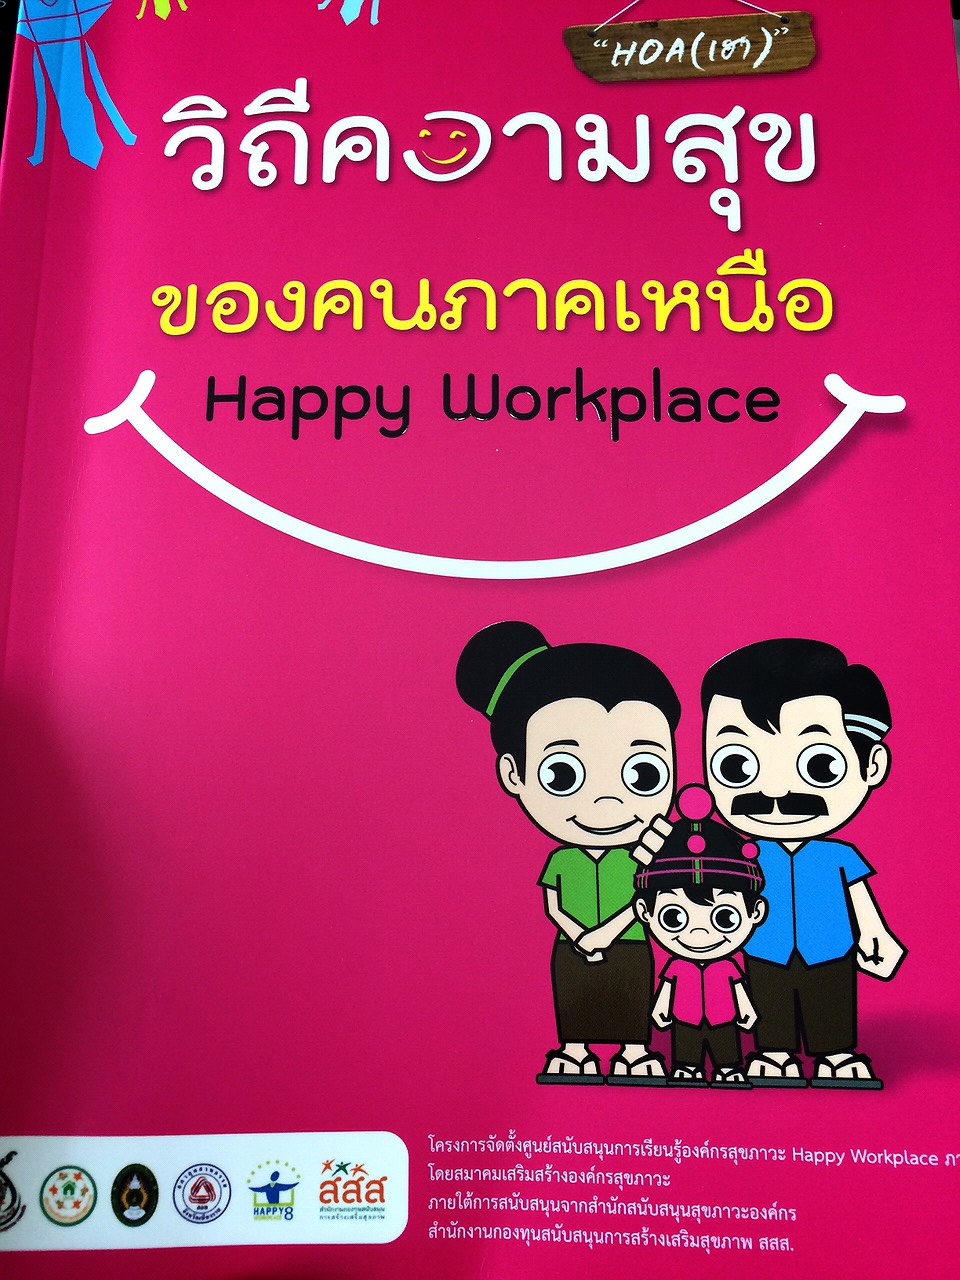 “Check In ความสุข” สานงาน เสริมพลัง สร้างความสุข Happy Workplace ภาคเหนือ thaihealth